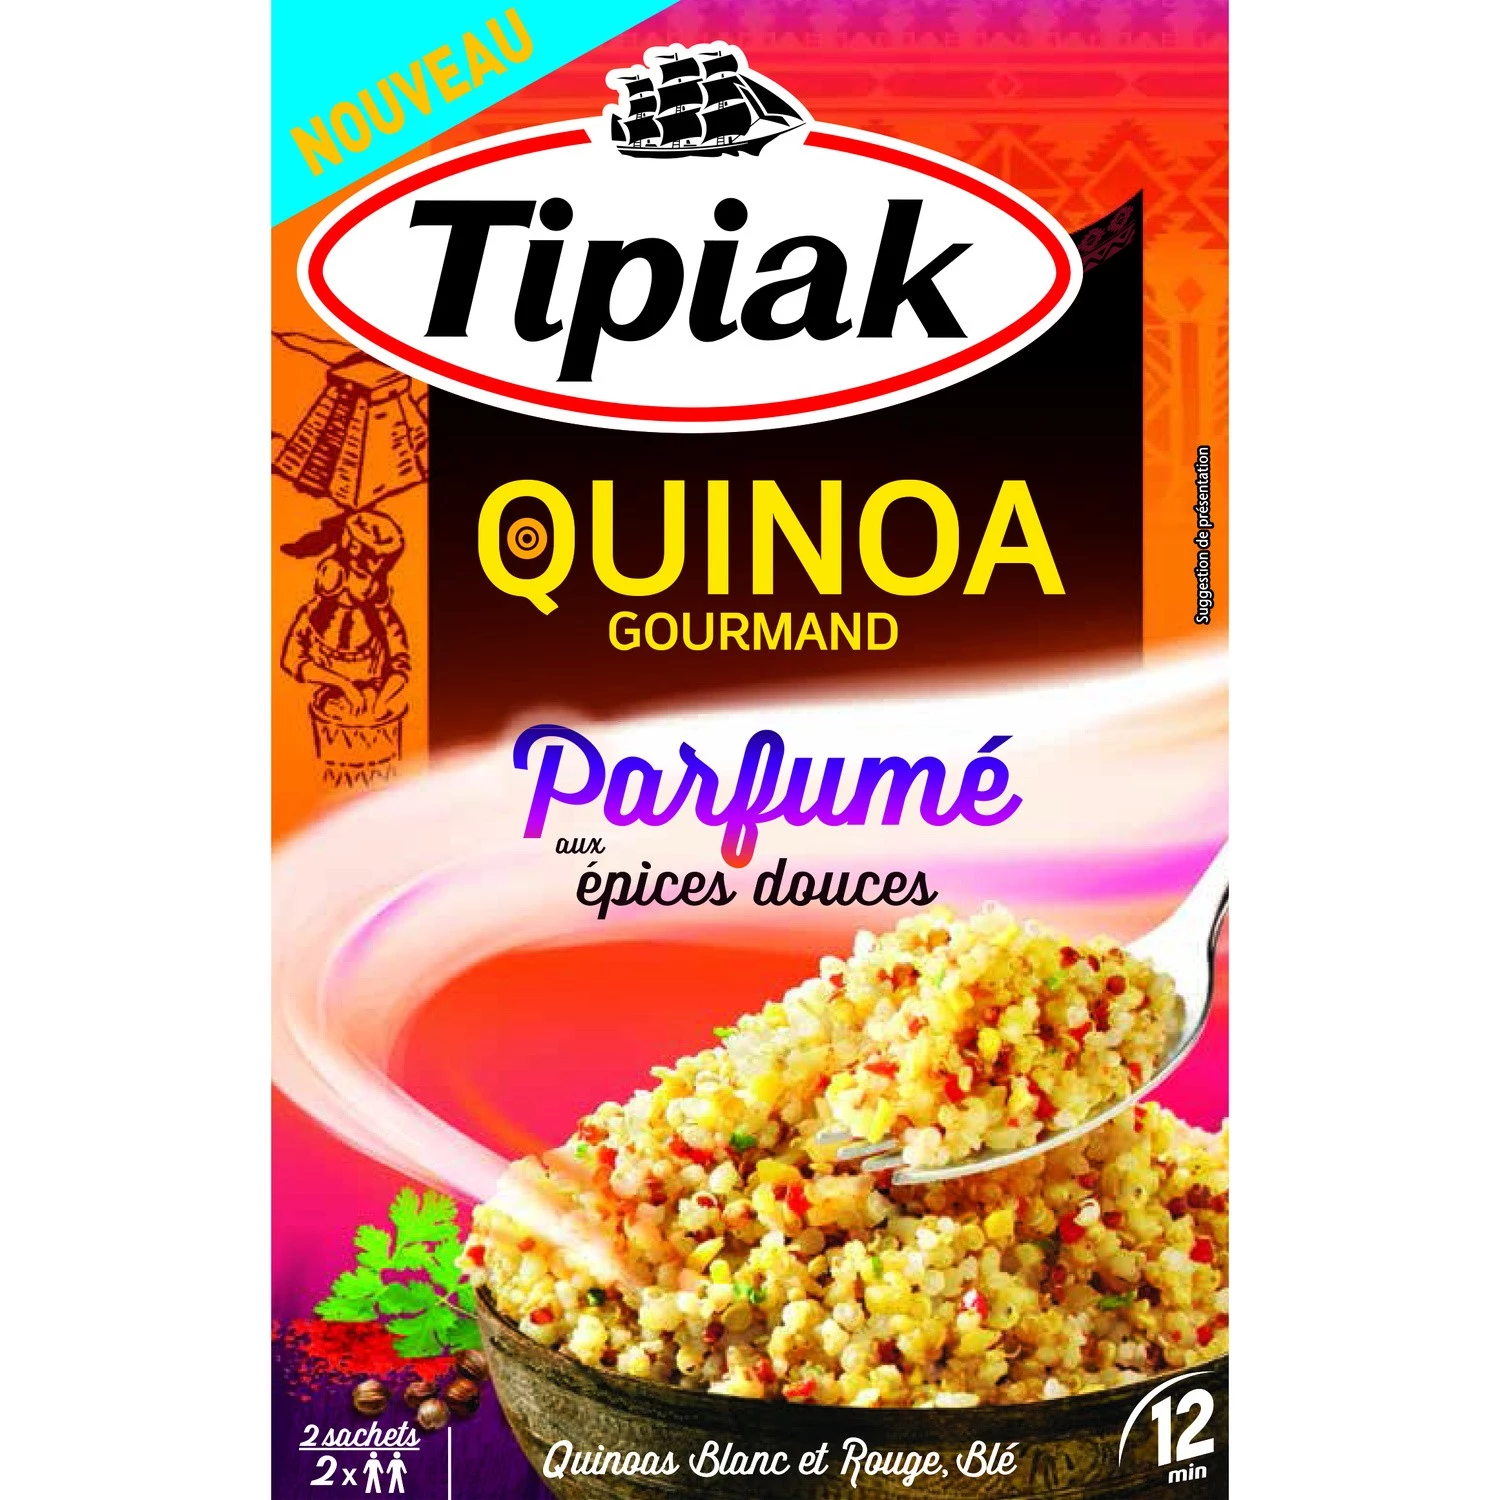 Quinoa Gourmet aromatizzata con spezie dolci 2x120g - TIPIAK